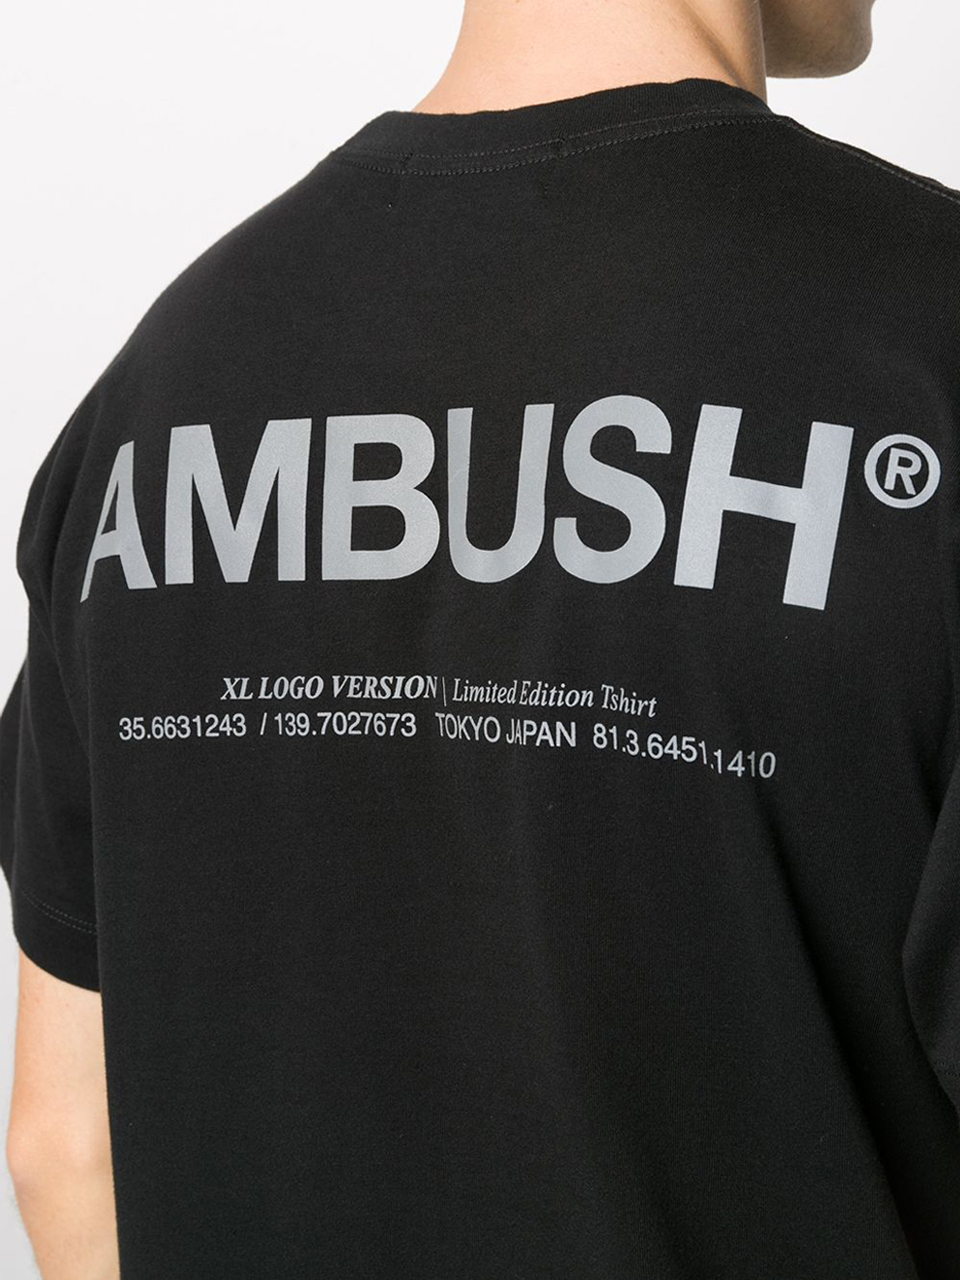 Imagem de: Camiseta AMBUSH Preta com Estampa Posterior